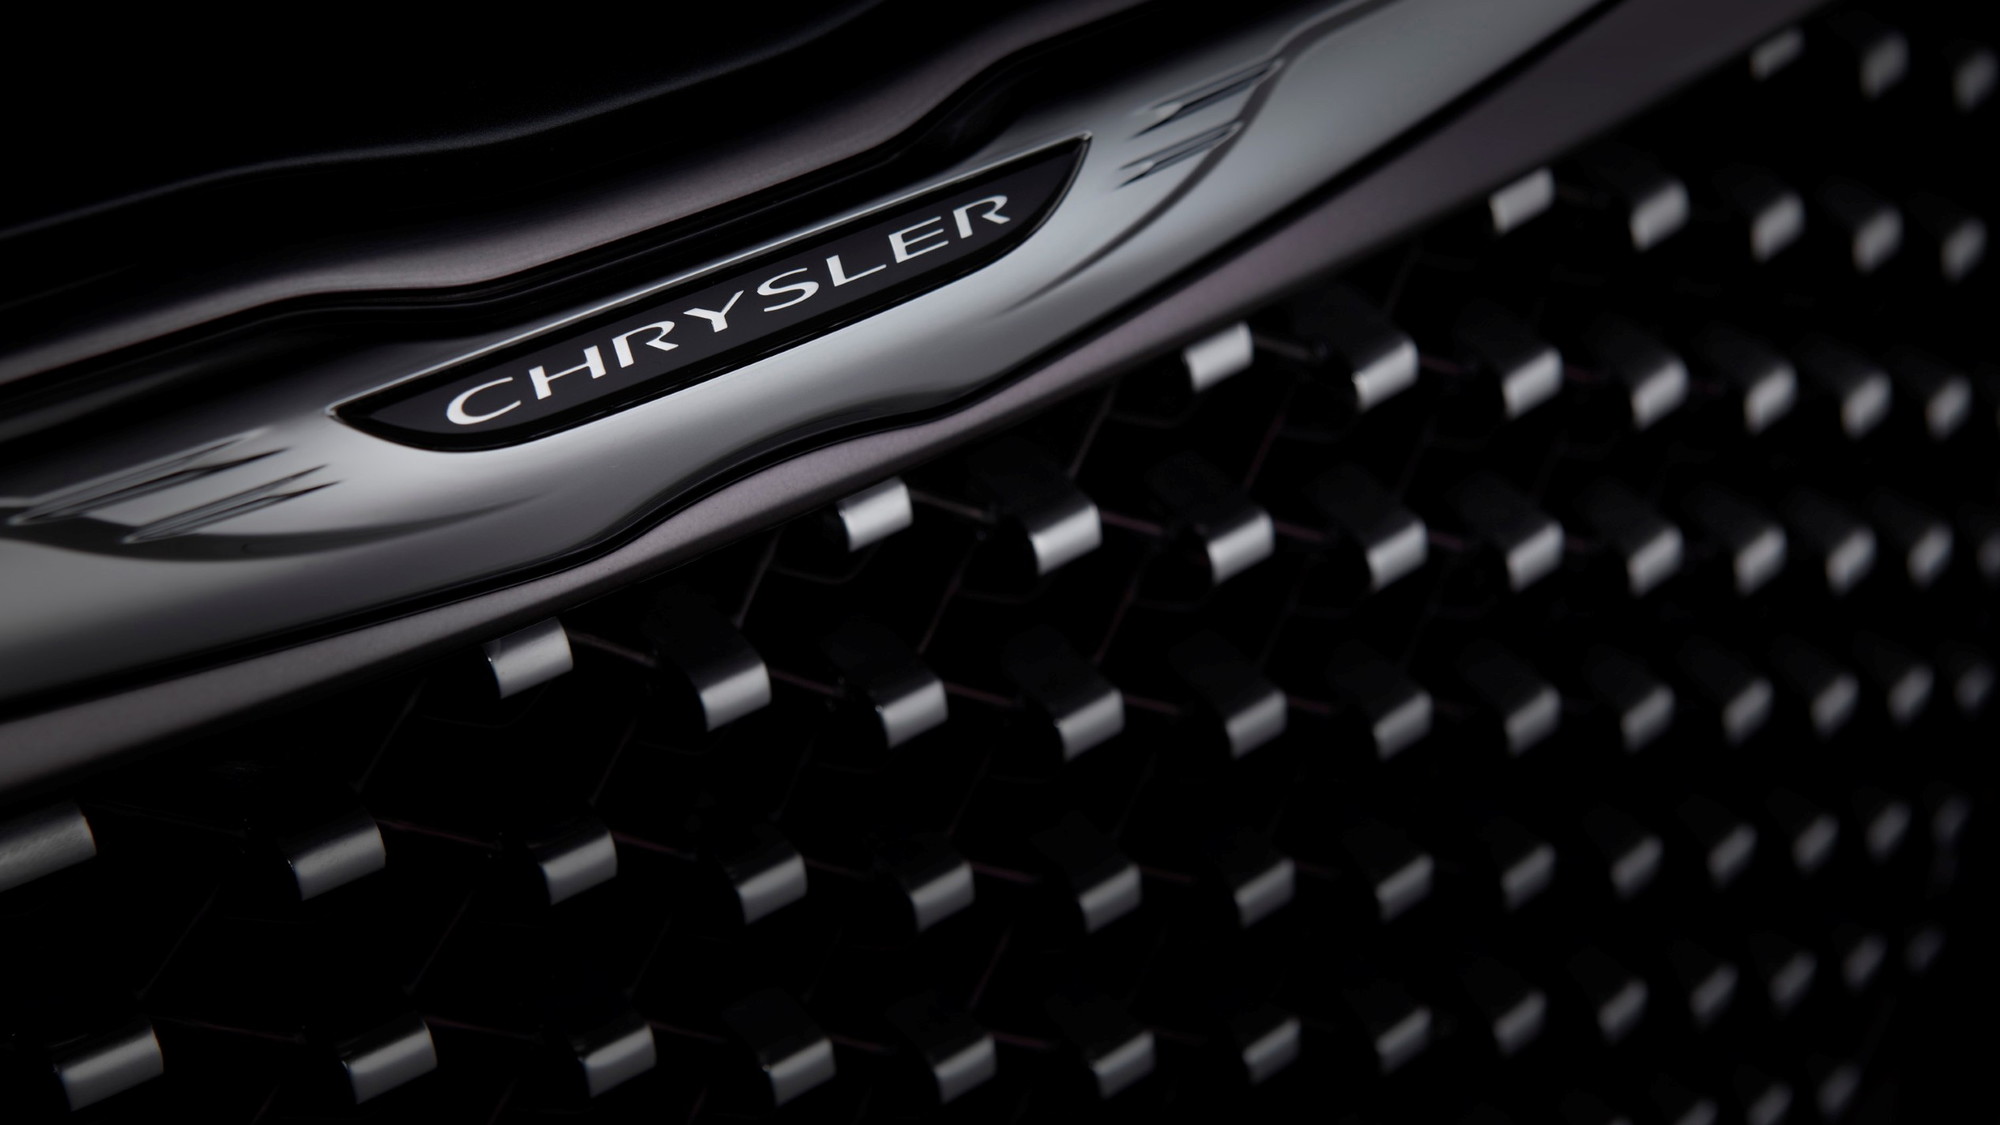 Chrysler design concepts for 2012 Beijing Auto Show